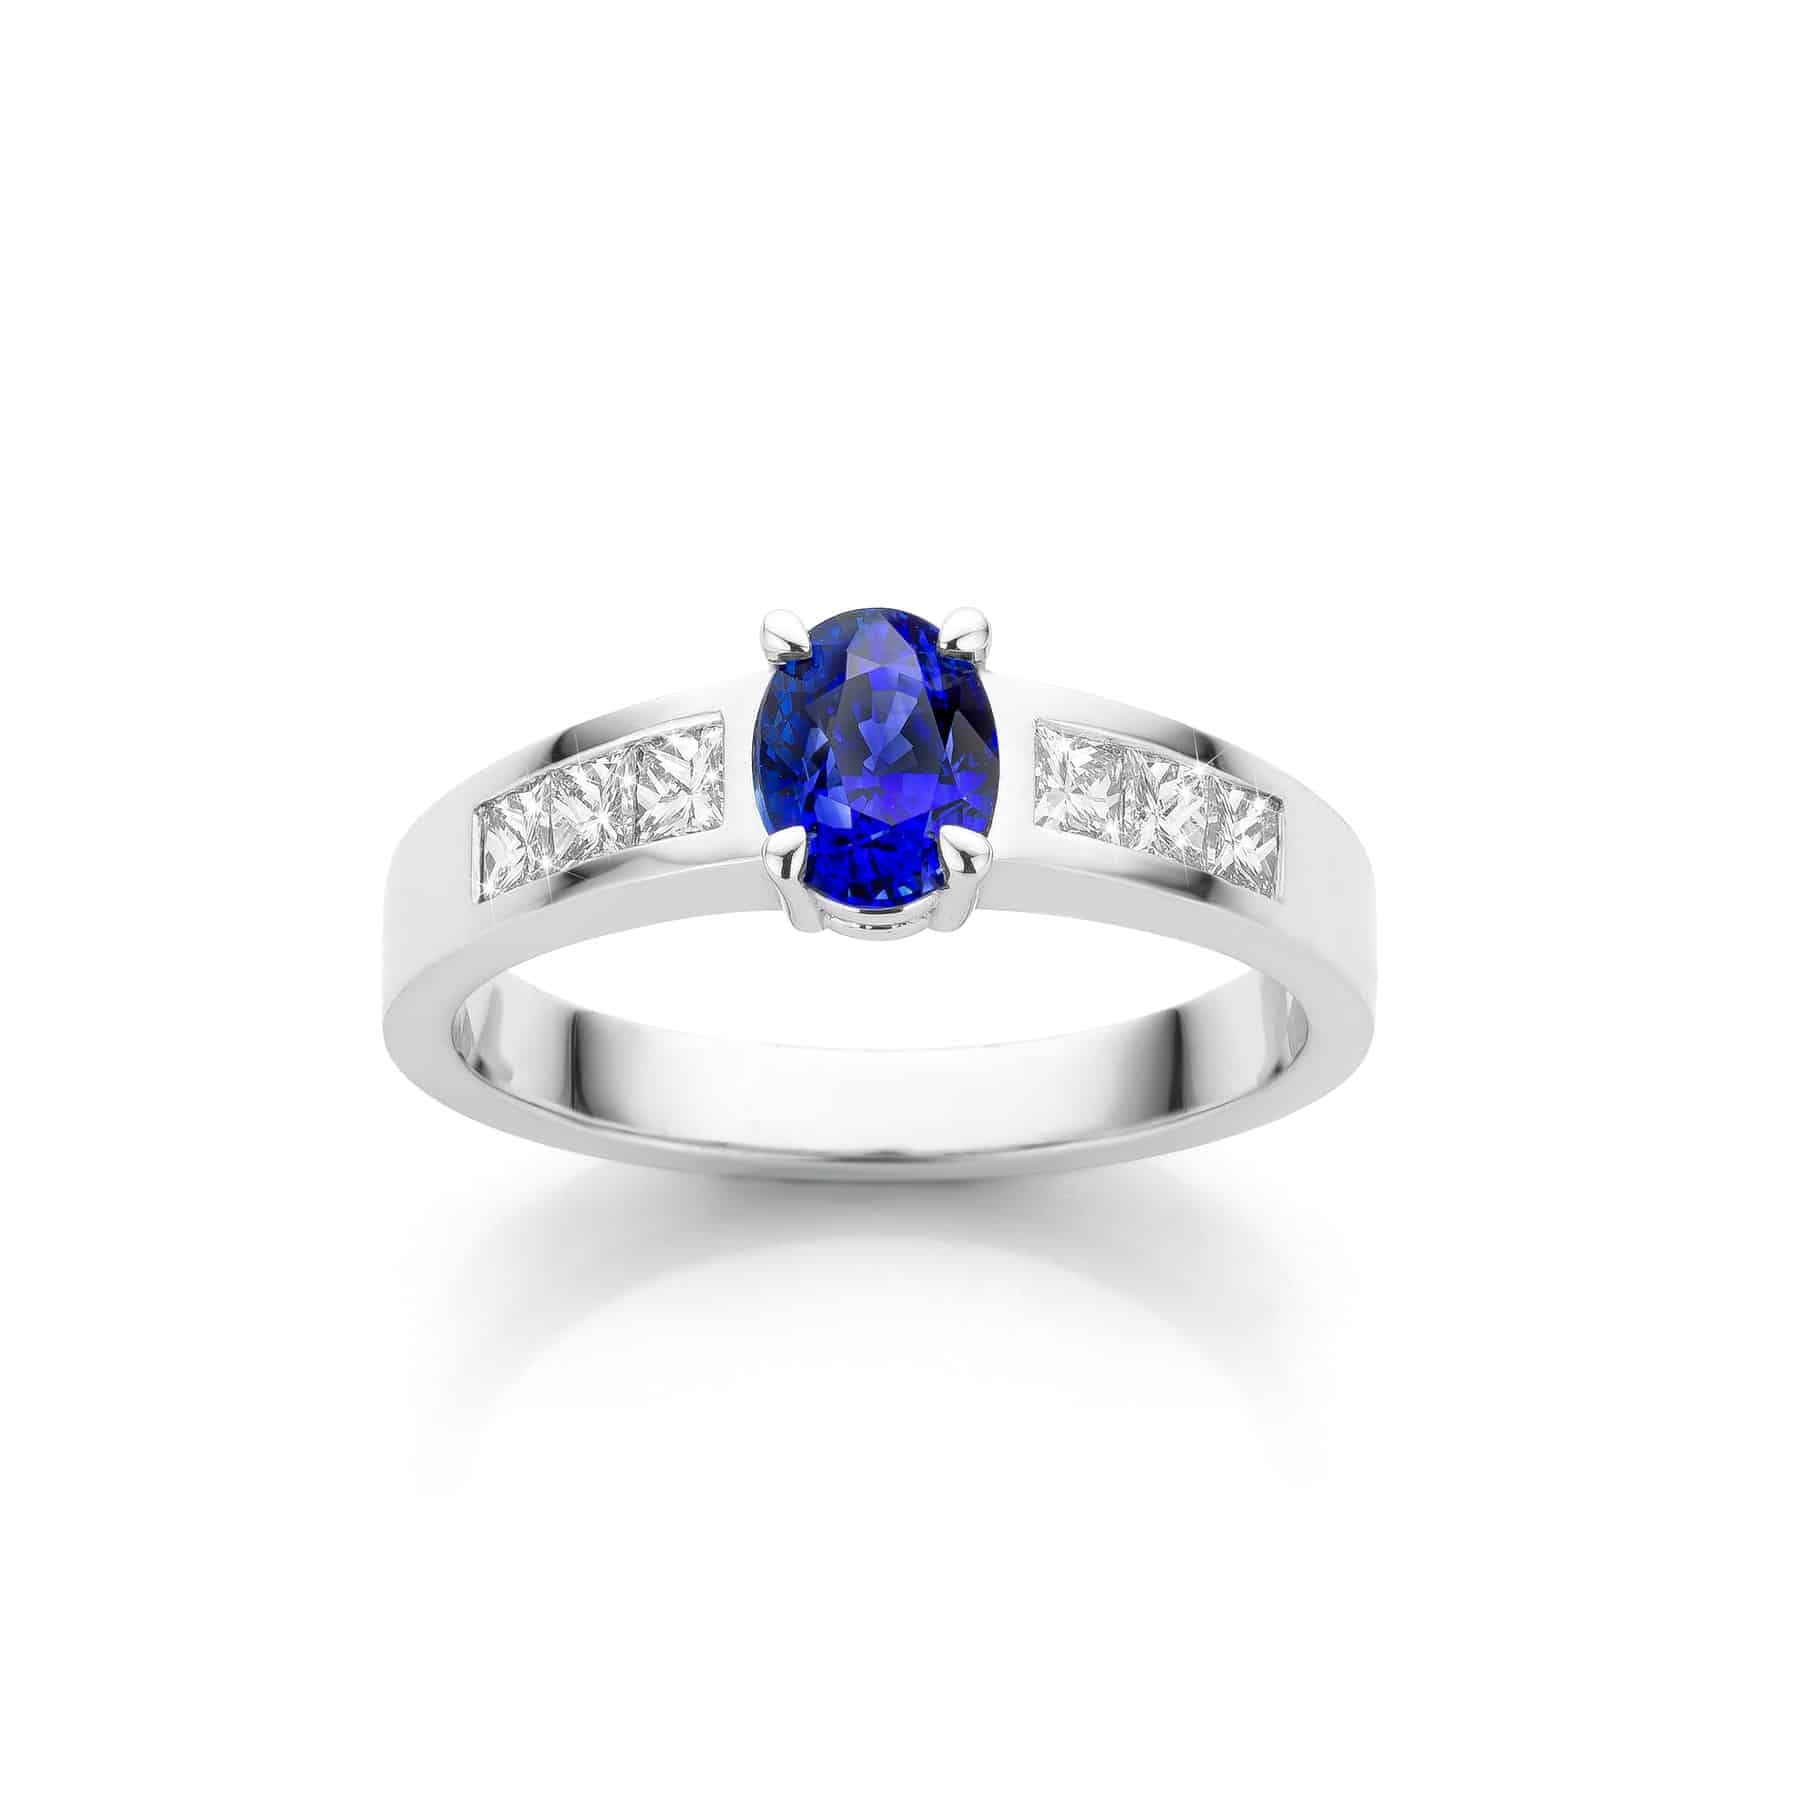 White Sapphire Rings | Buy Sapphire Rings Online At Best Price Kalyan